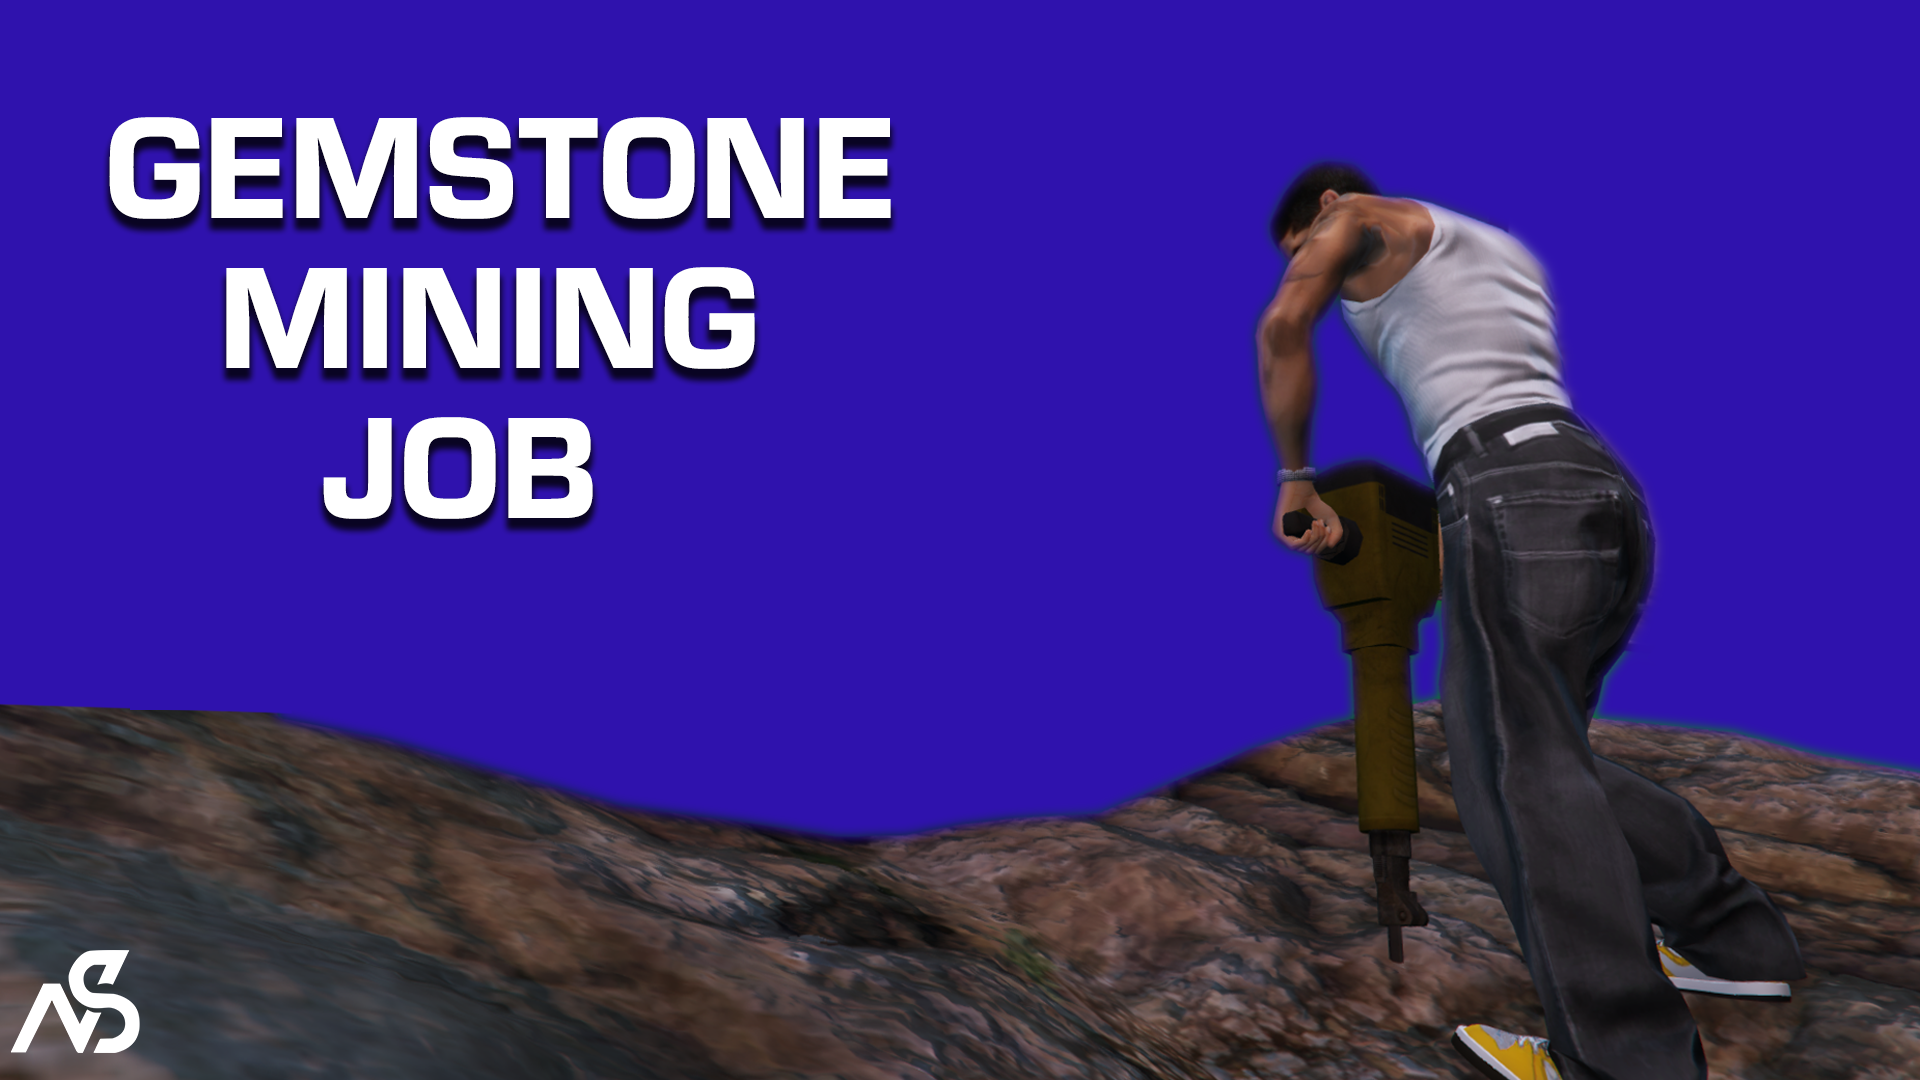 Gemstone mining job! Resource